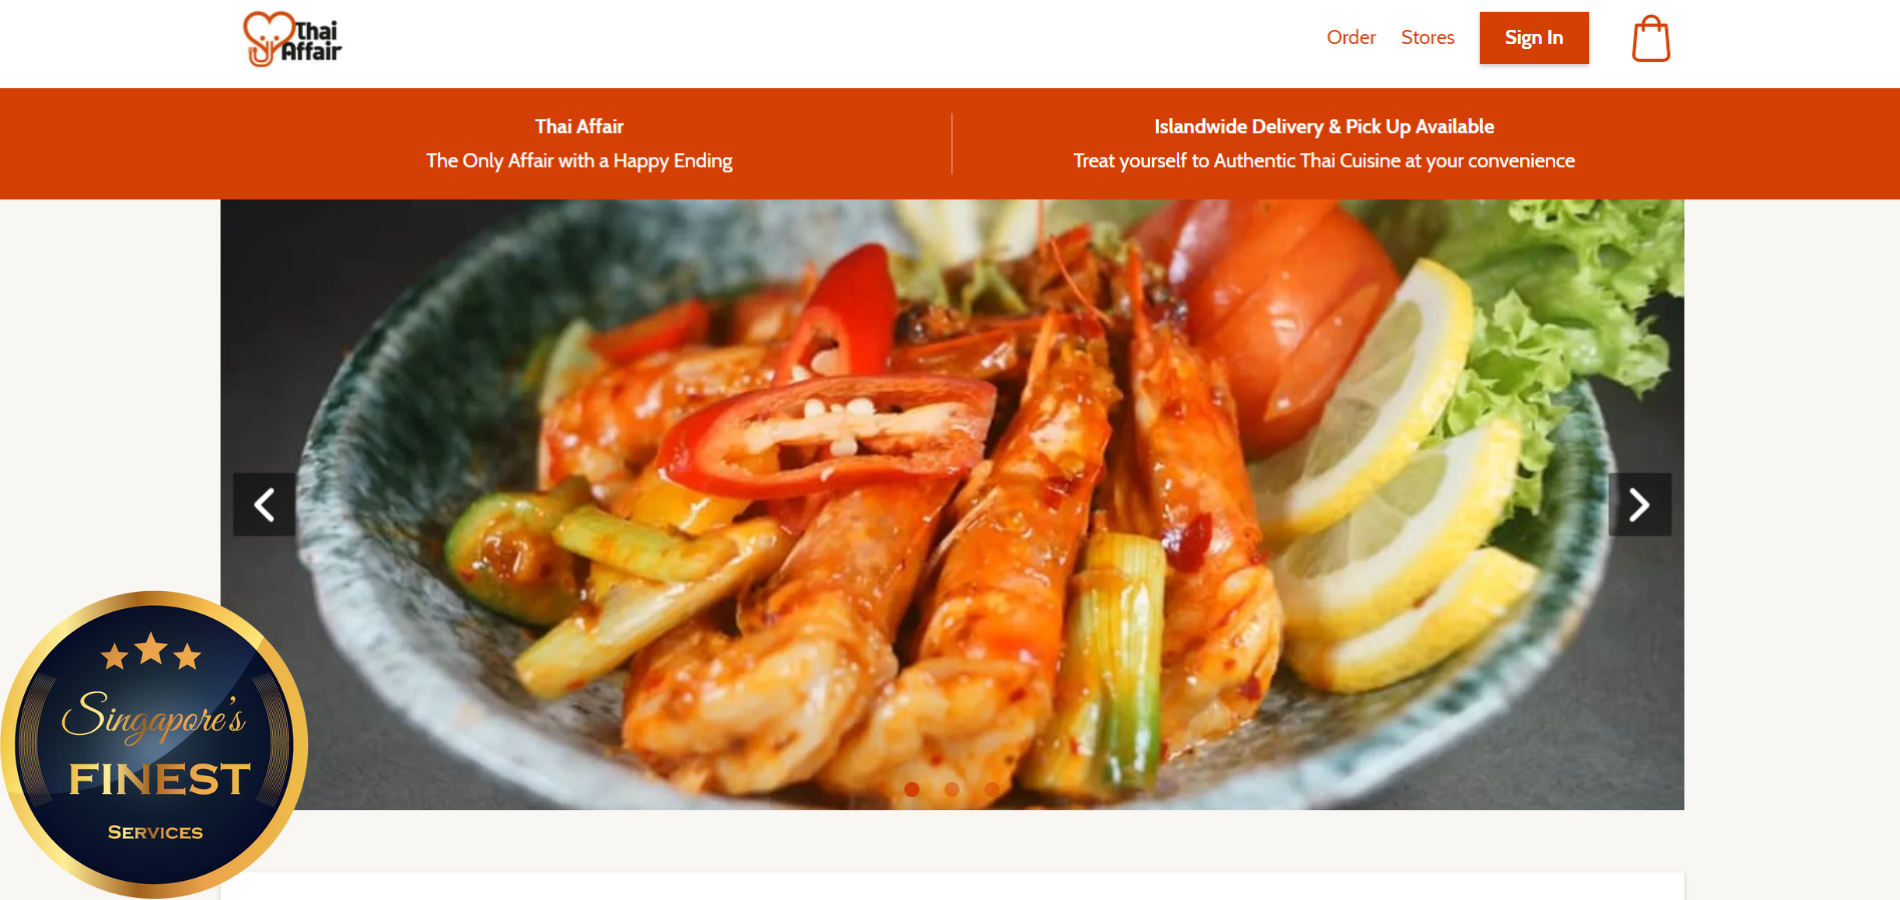 Best Thai Food Restaurants in Singapore